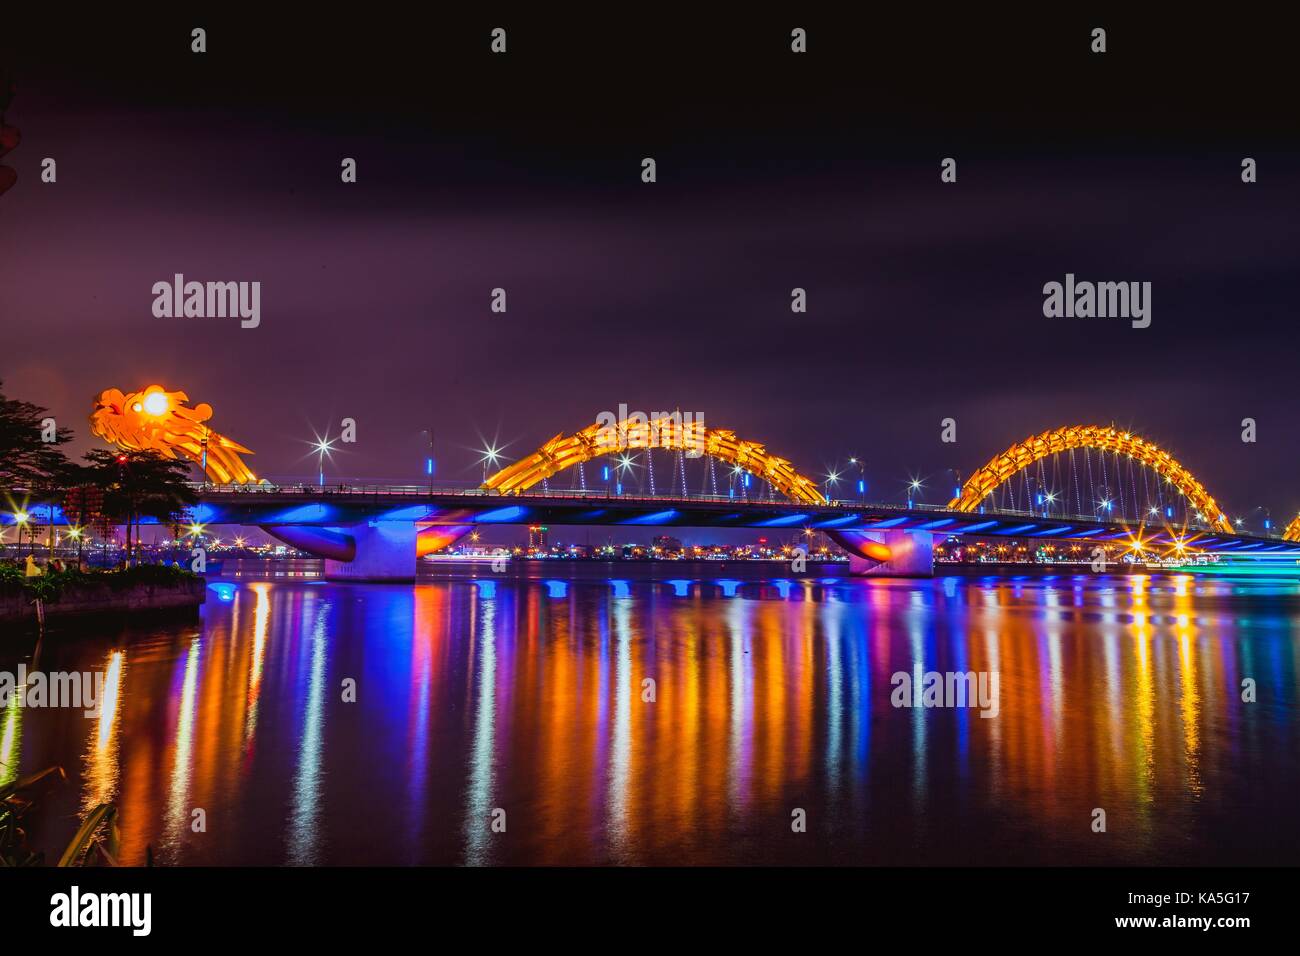 DA NANG, VIETNAM - MARCH 19, 2017: Dragon Bridge at night in Da Nang, Vietnam. Beautiful photo of modern city in night illumination. Stock Photo